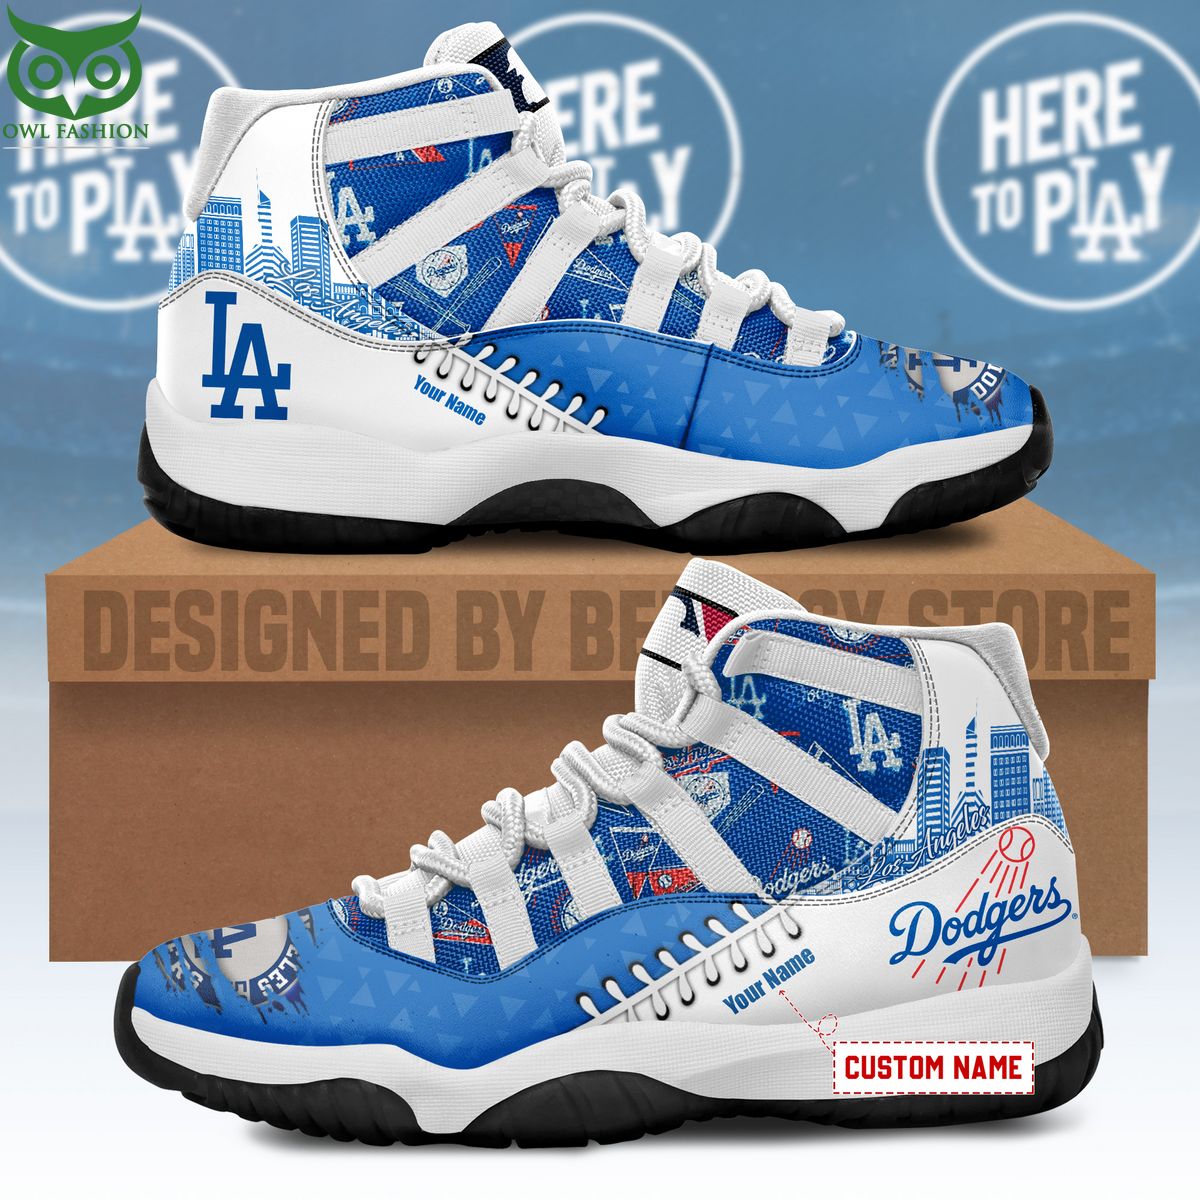 Los Angeles Dodgers Custom Shoes Limited Edition AJ 11 MLB Air Jordan